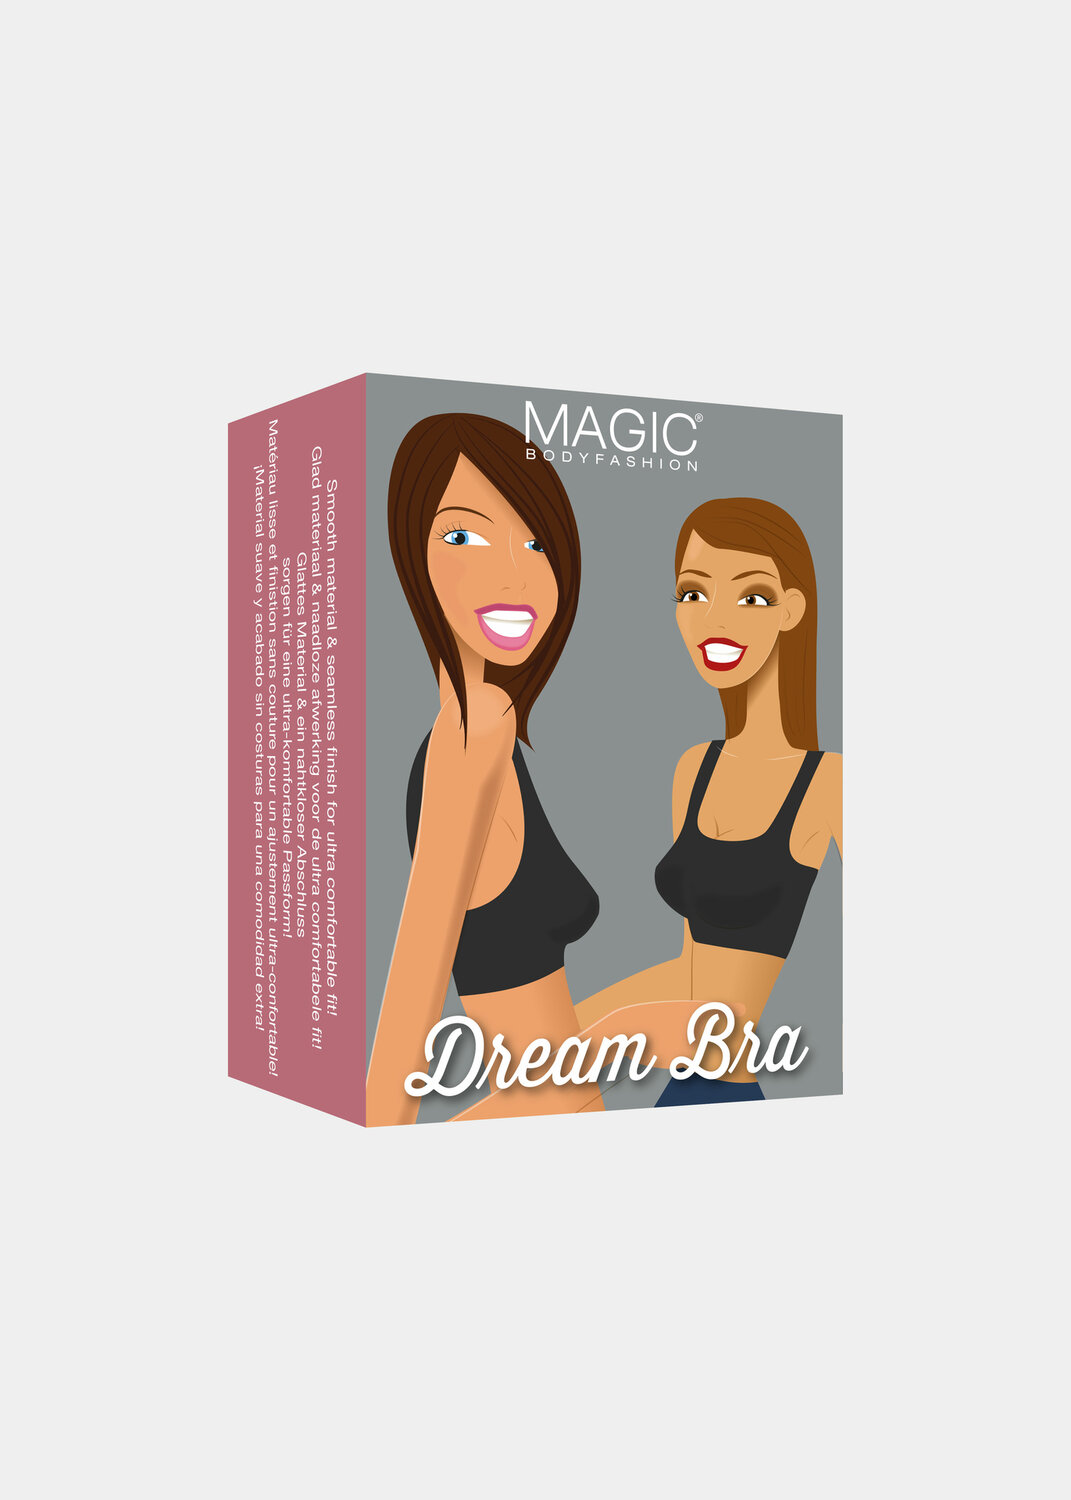 MAGIC Bodyfashion - Dream Bra